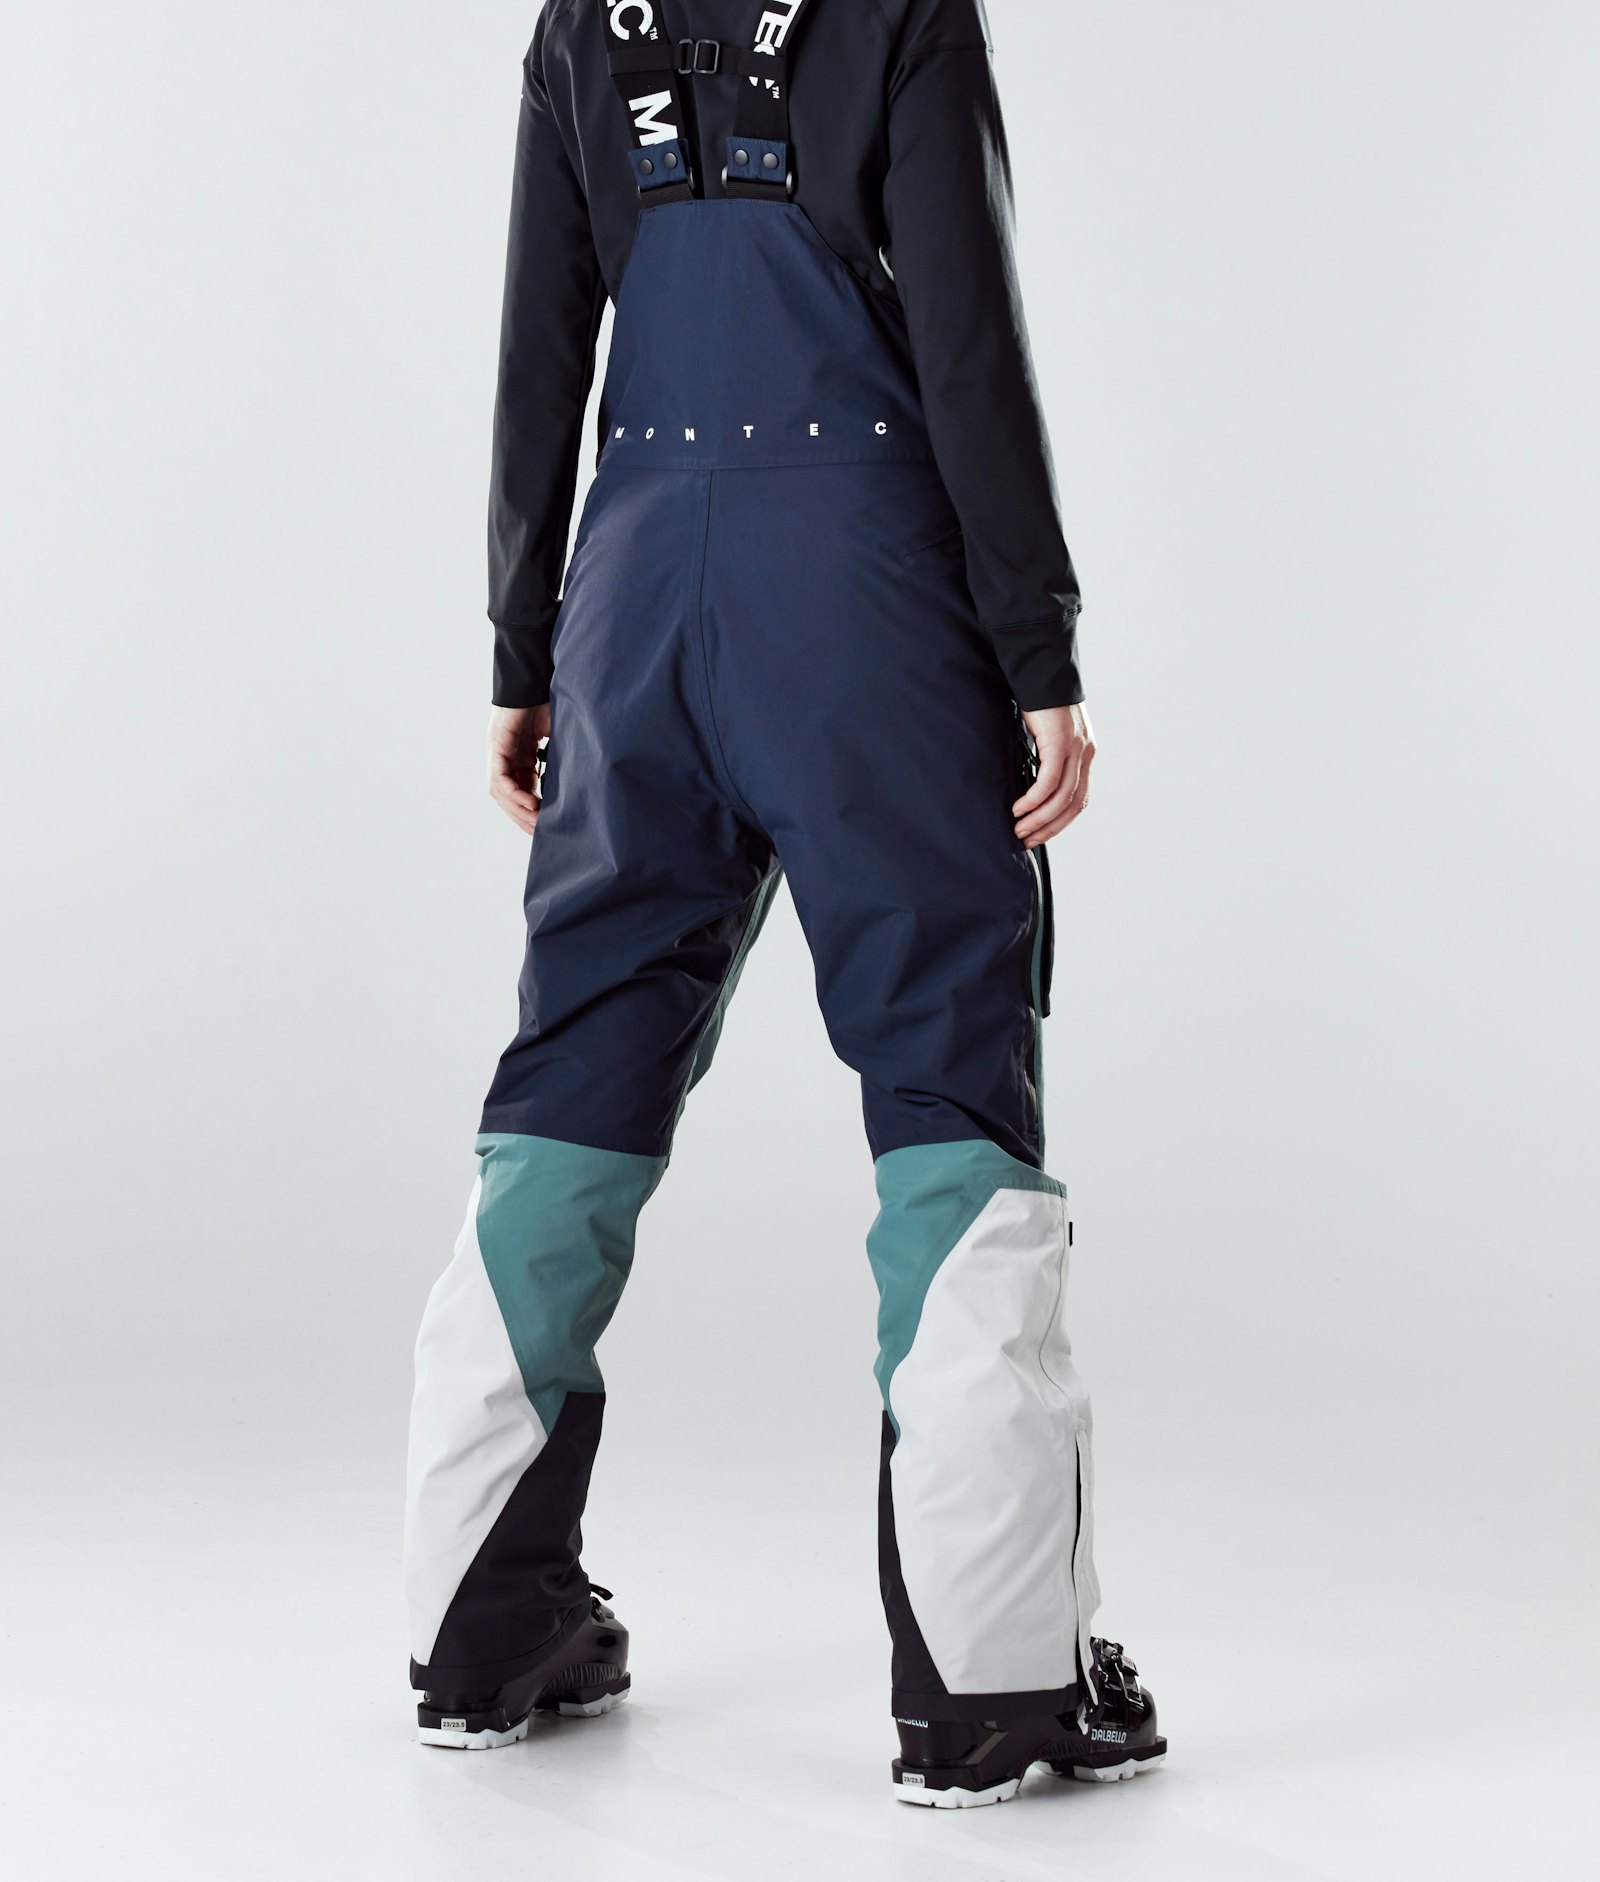 Fawk W 2020 Pantalon de Ski Femme Marine/Atlantic/Light Grey